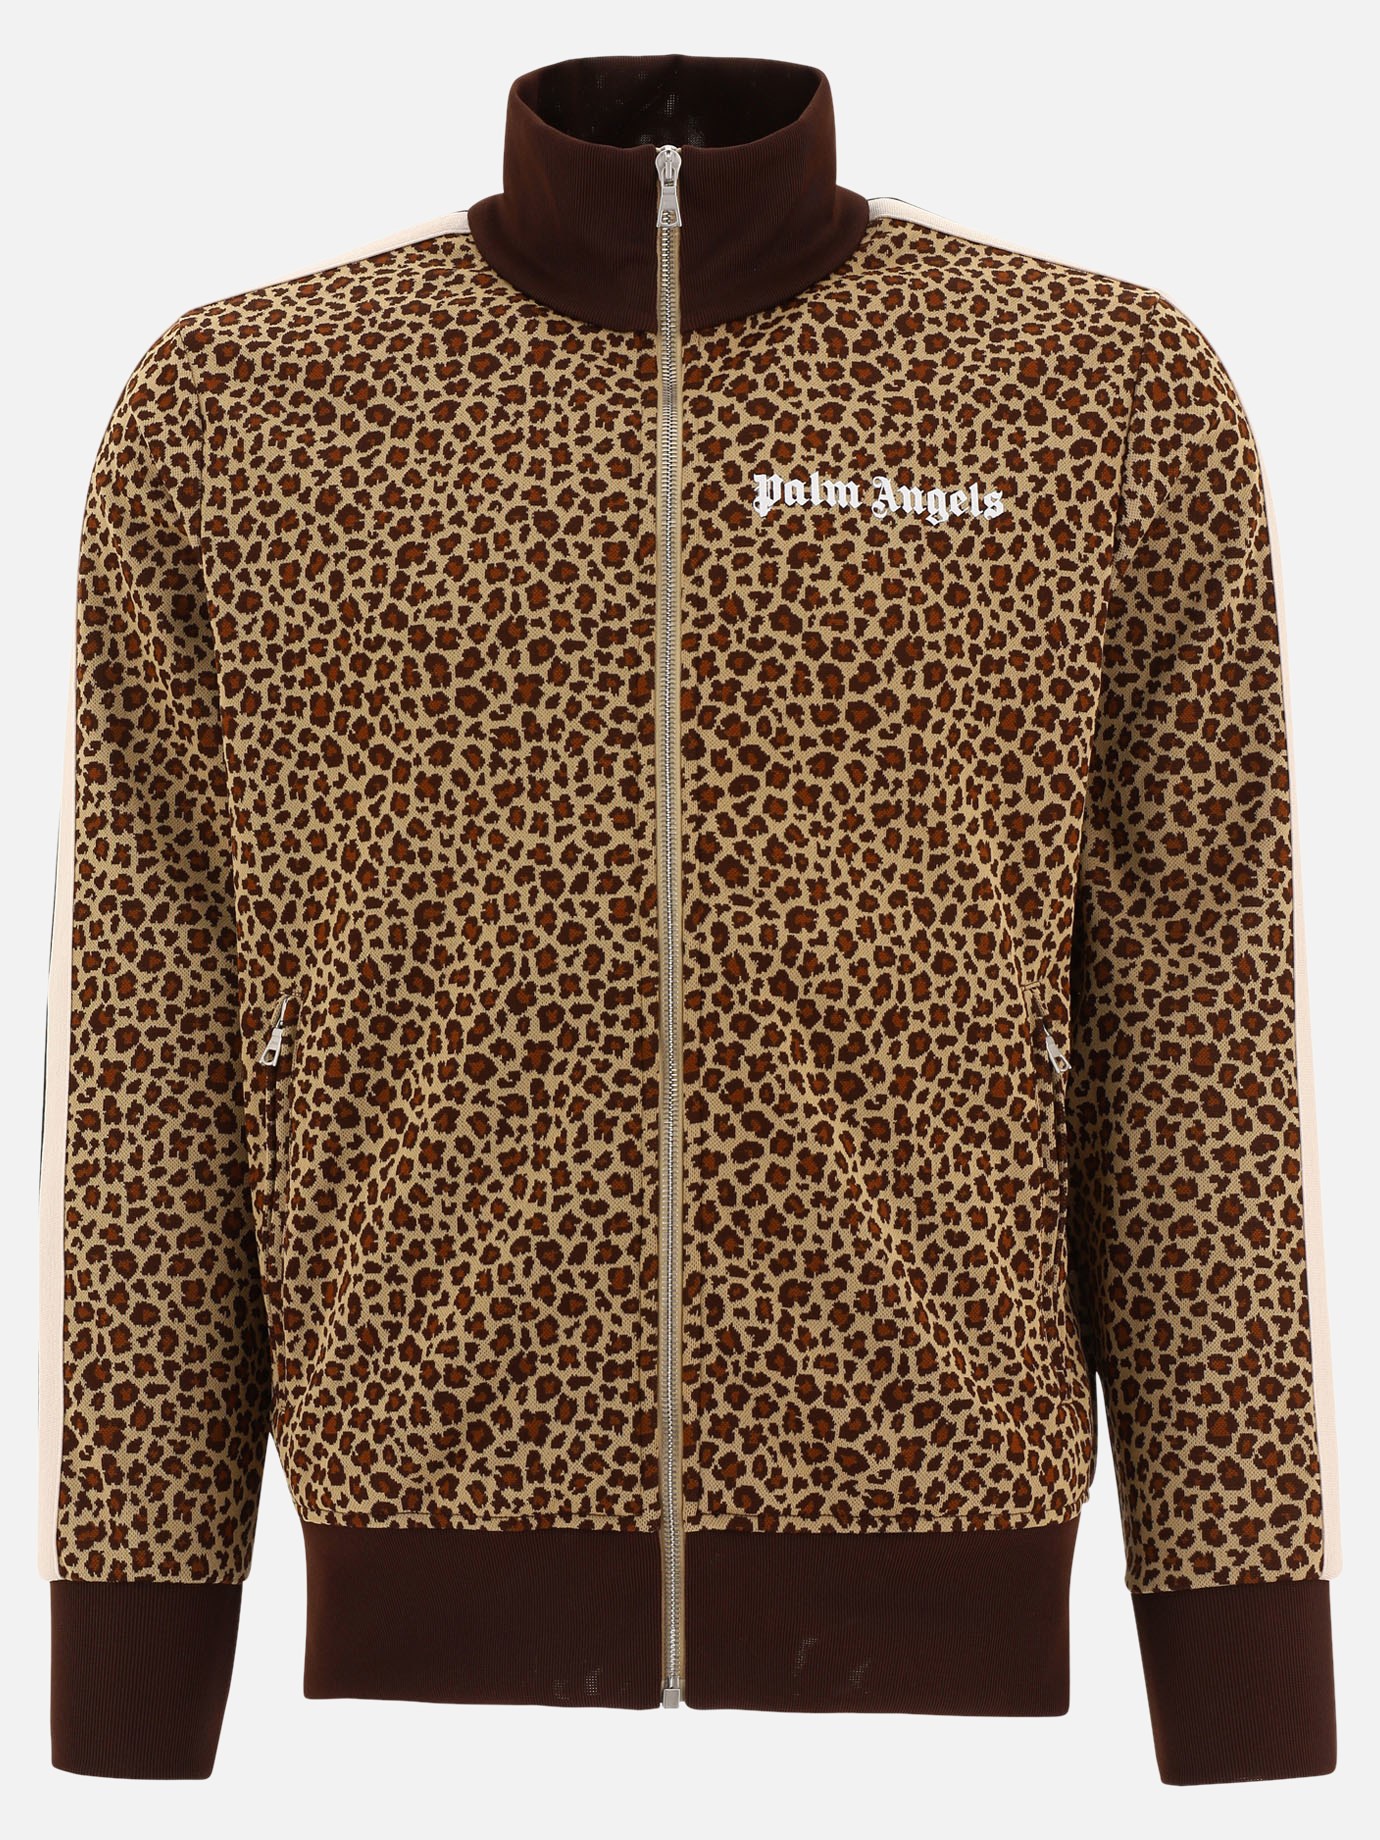  Leopard  sweatshirtby Palm Angels - 1